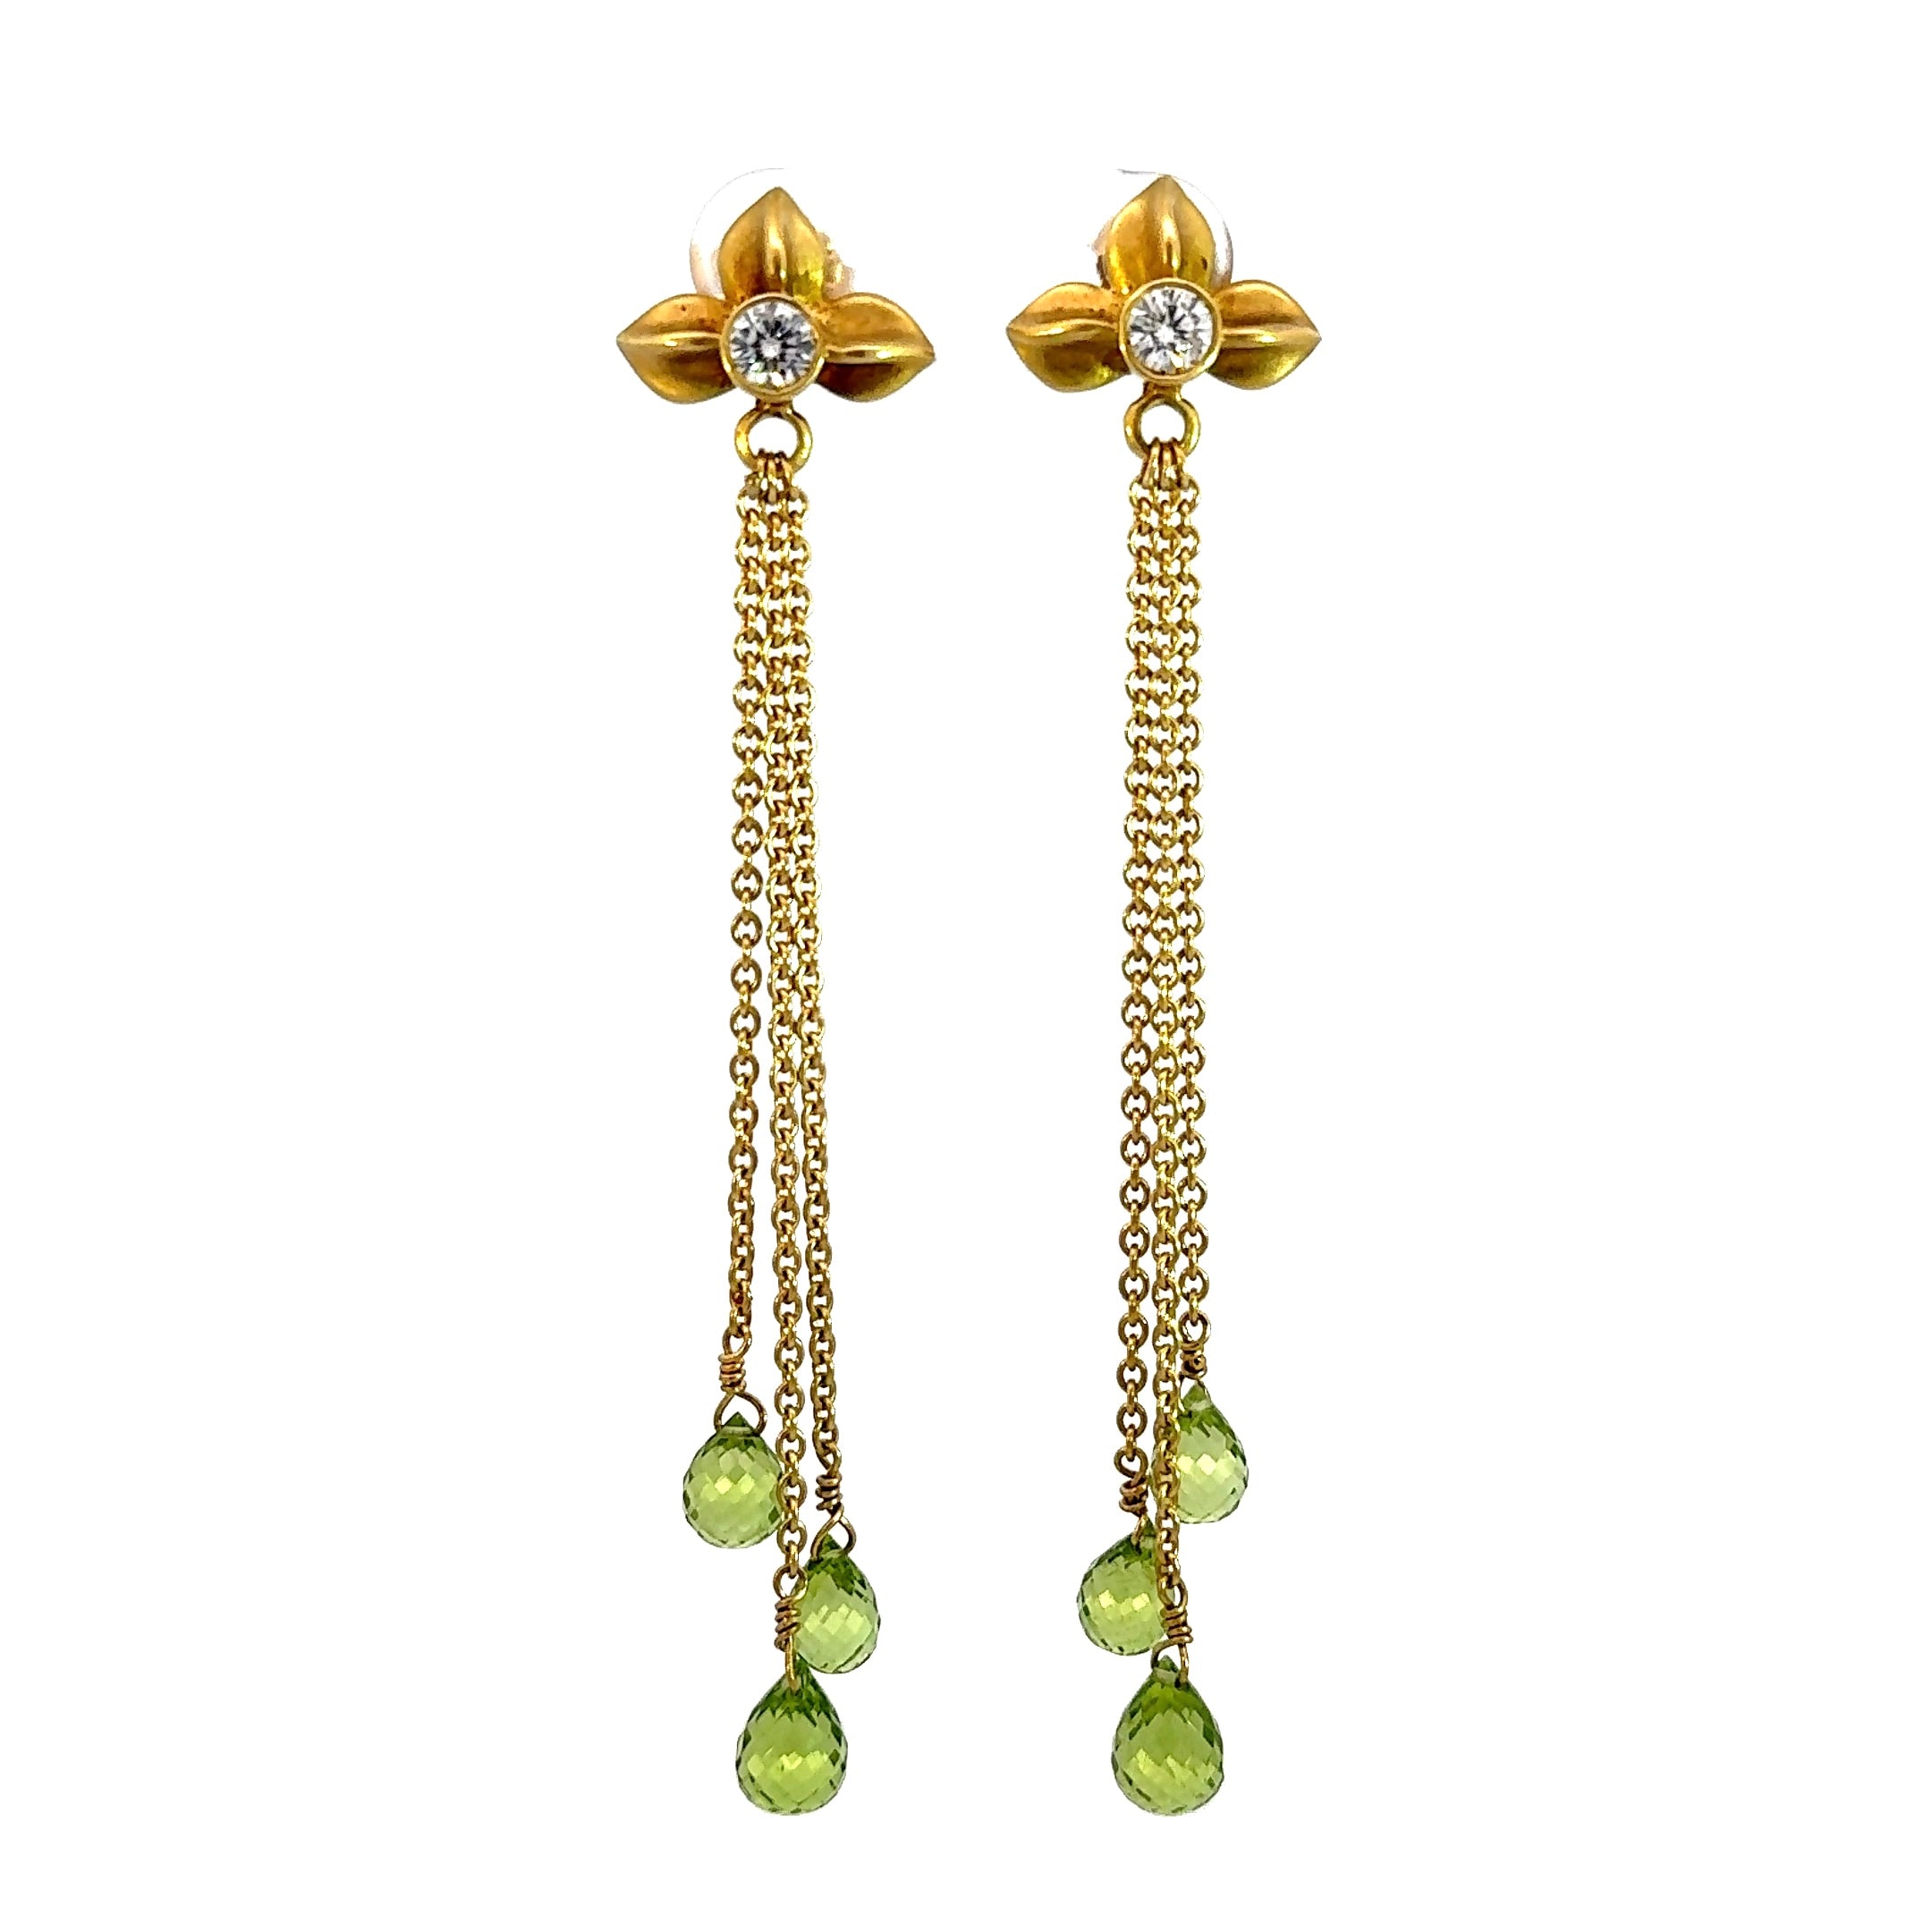 Vintage Peridot and Diamond Dangle Earrings in 14K Yellow Gold